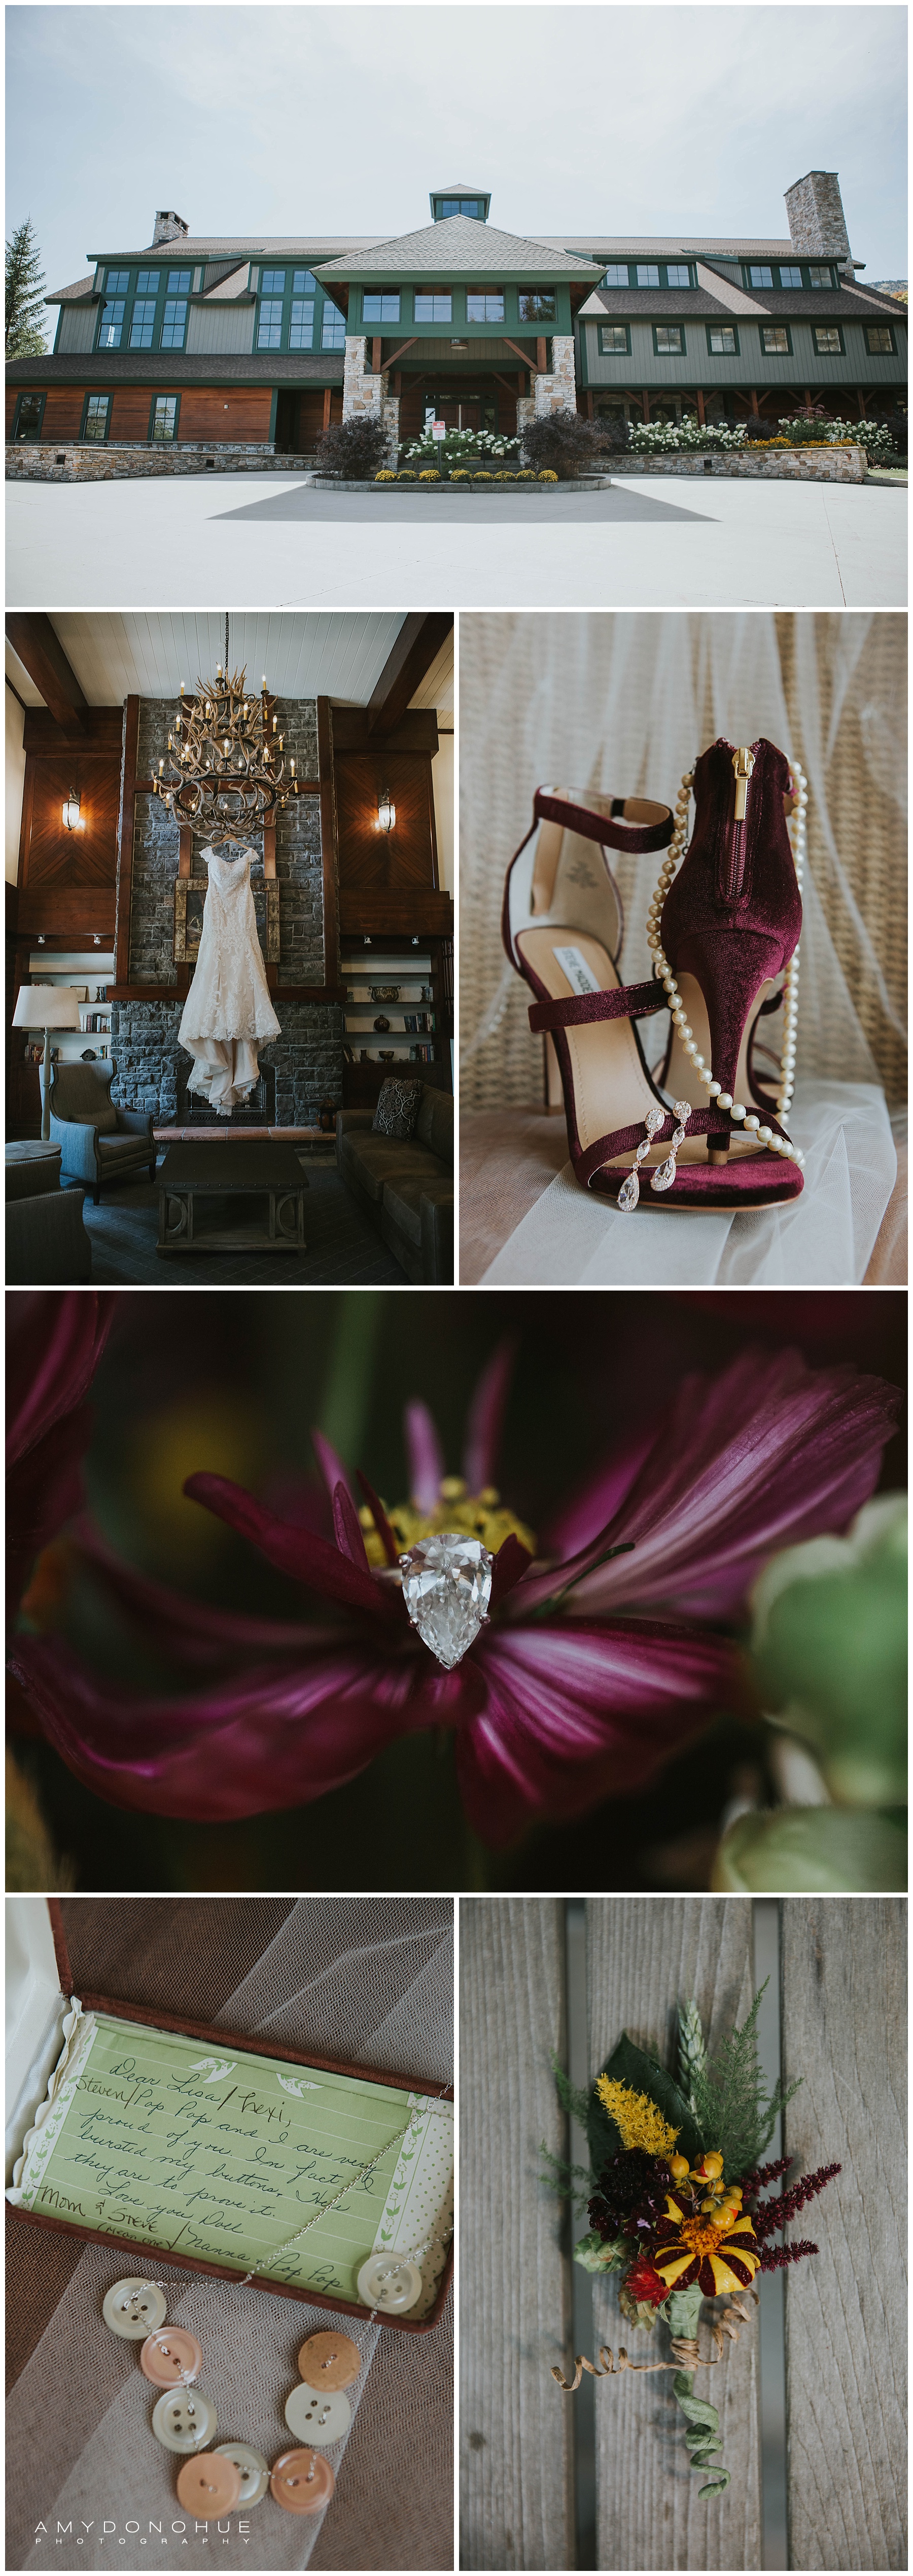 Wedding Details | Vermont Wedding Photographer ©Amy Donohue Photography